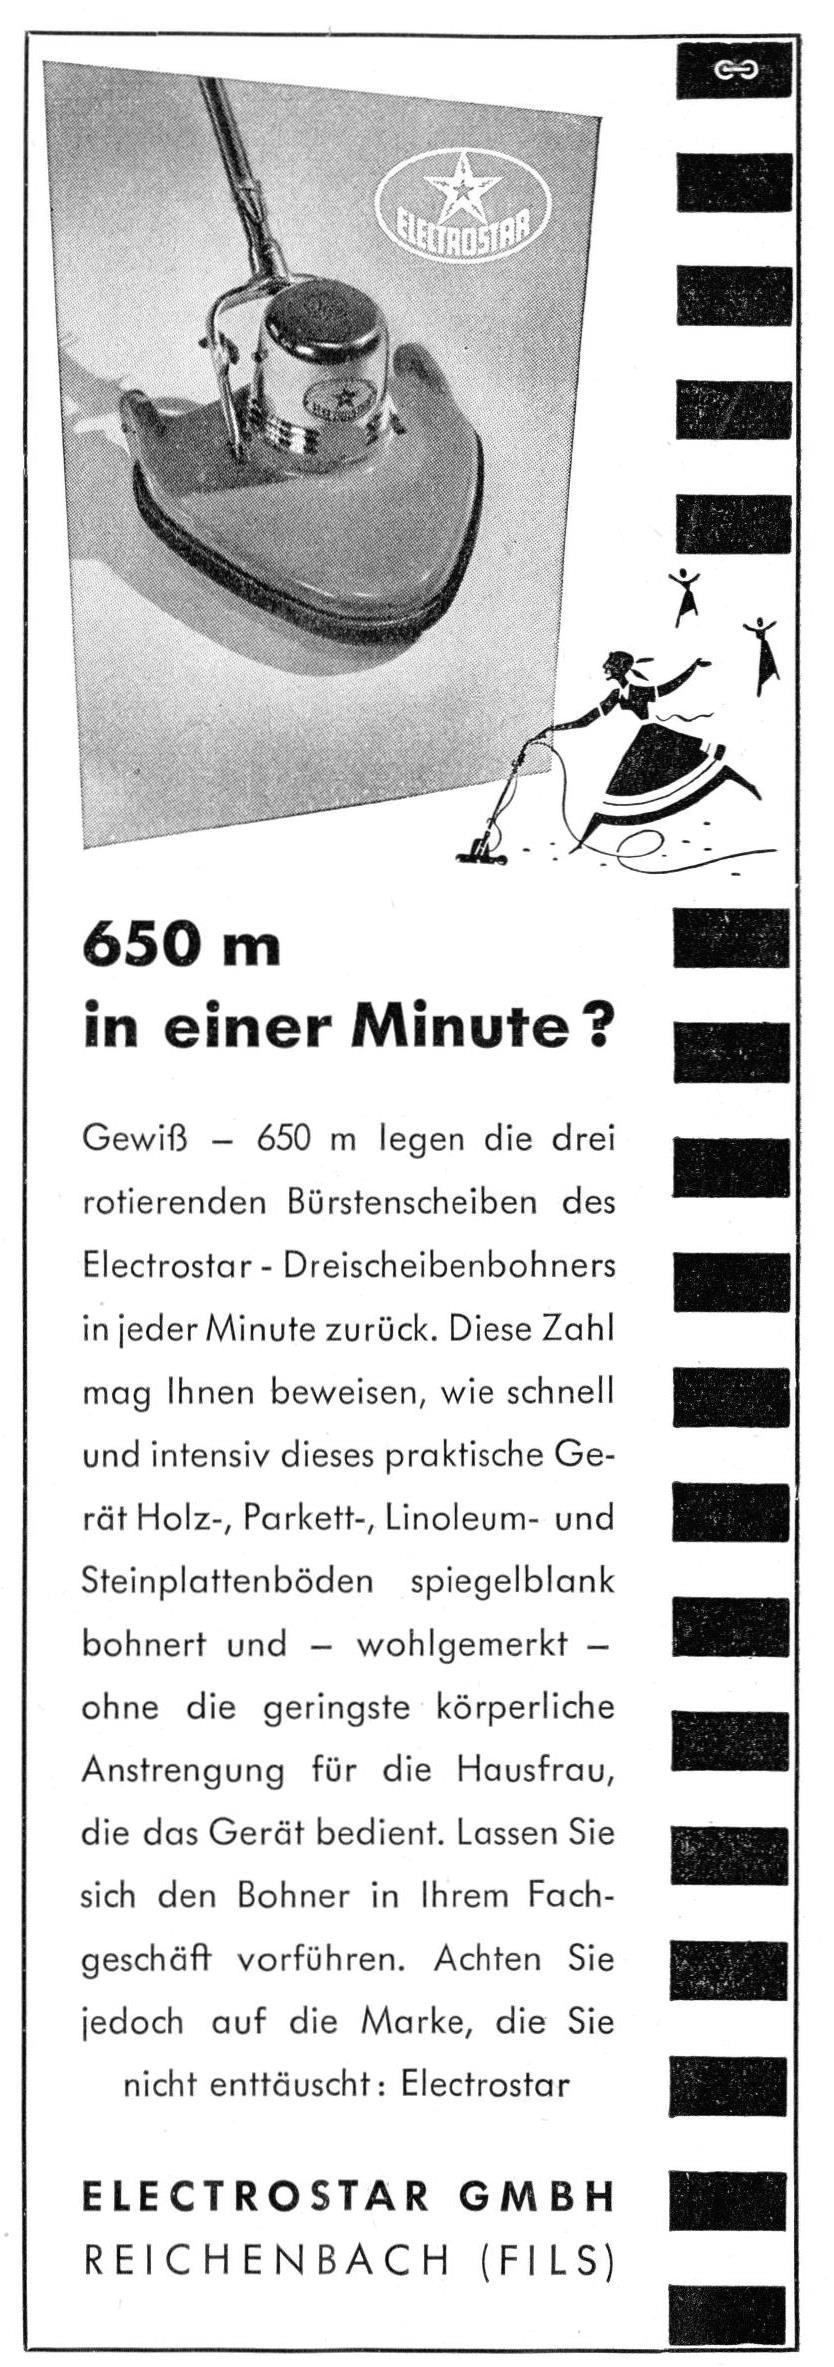 Electrostar 1953 0.jpg